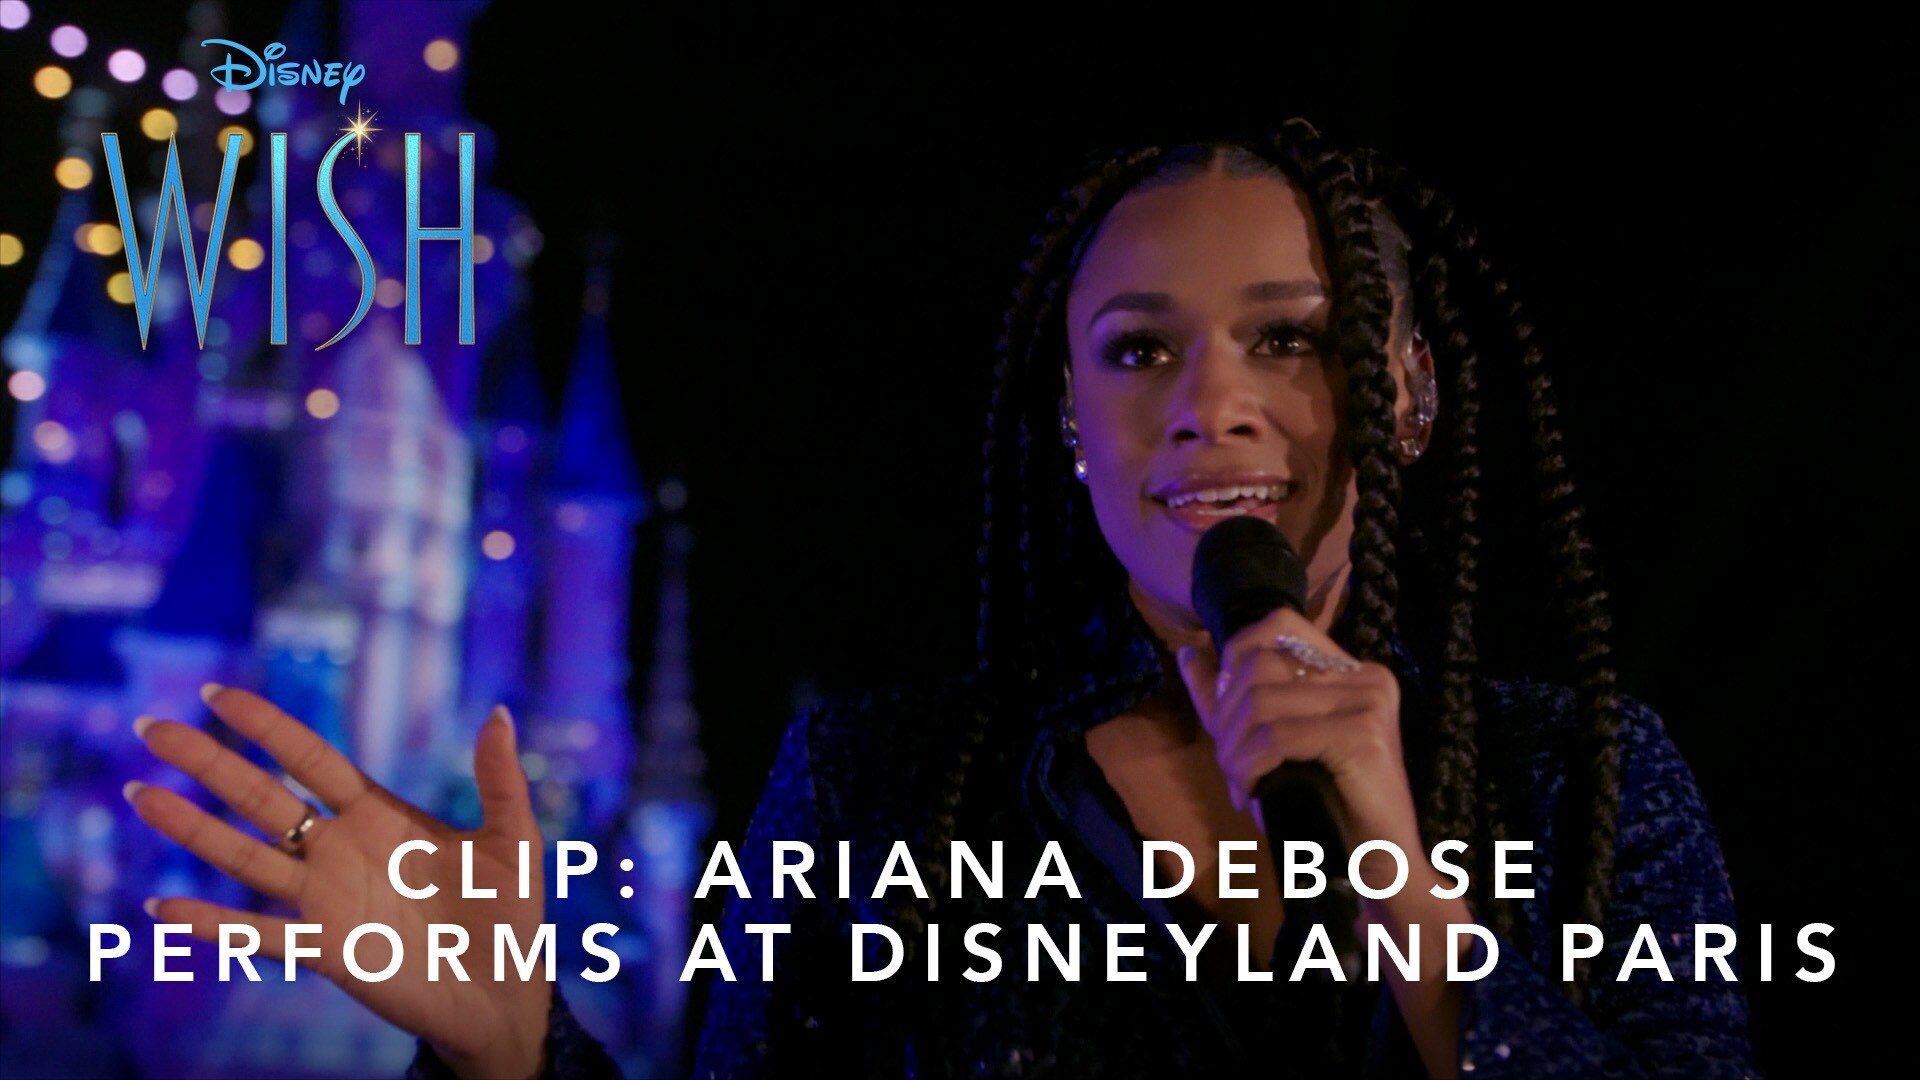 Clip: Ariana Debose Performs "This Wish" at Disneyland Paris